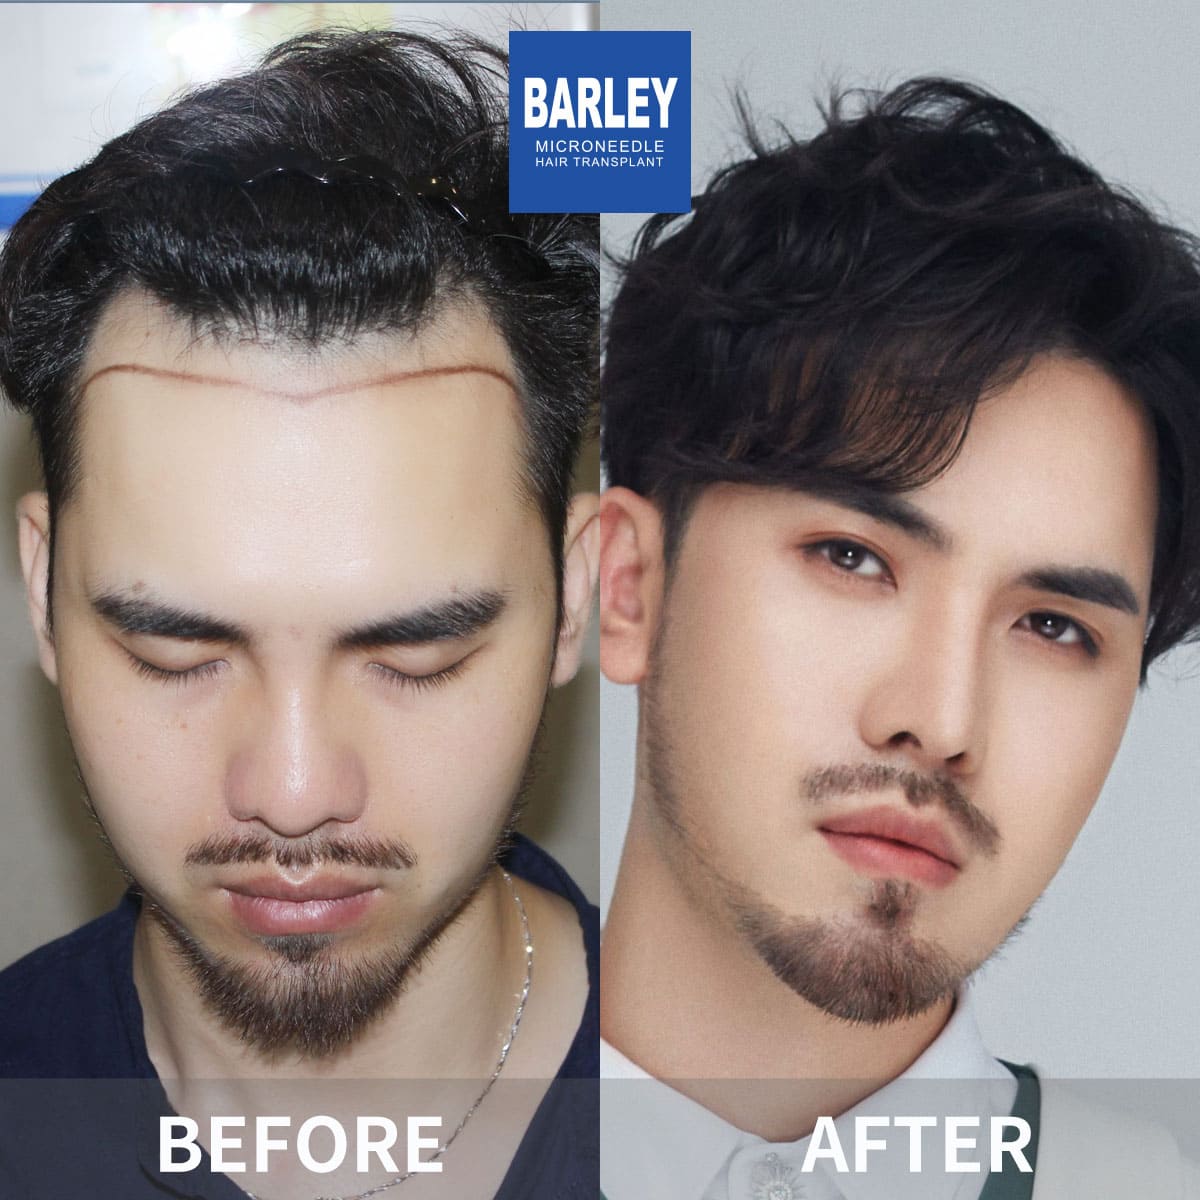 Hair loss treatment results